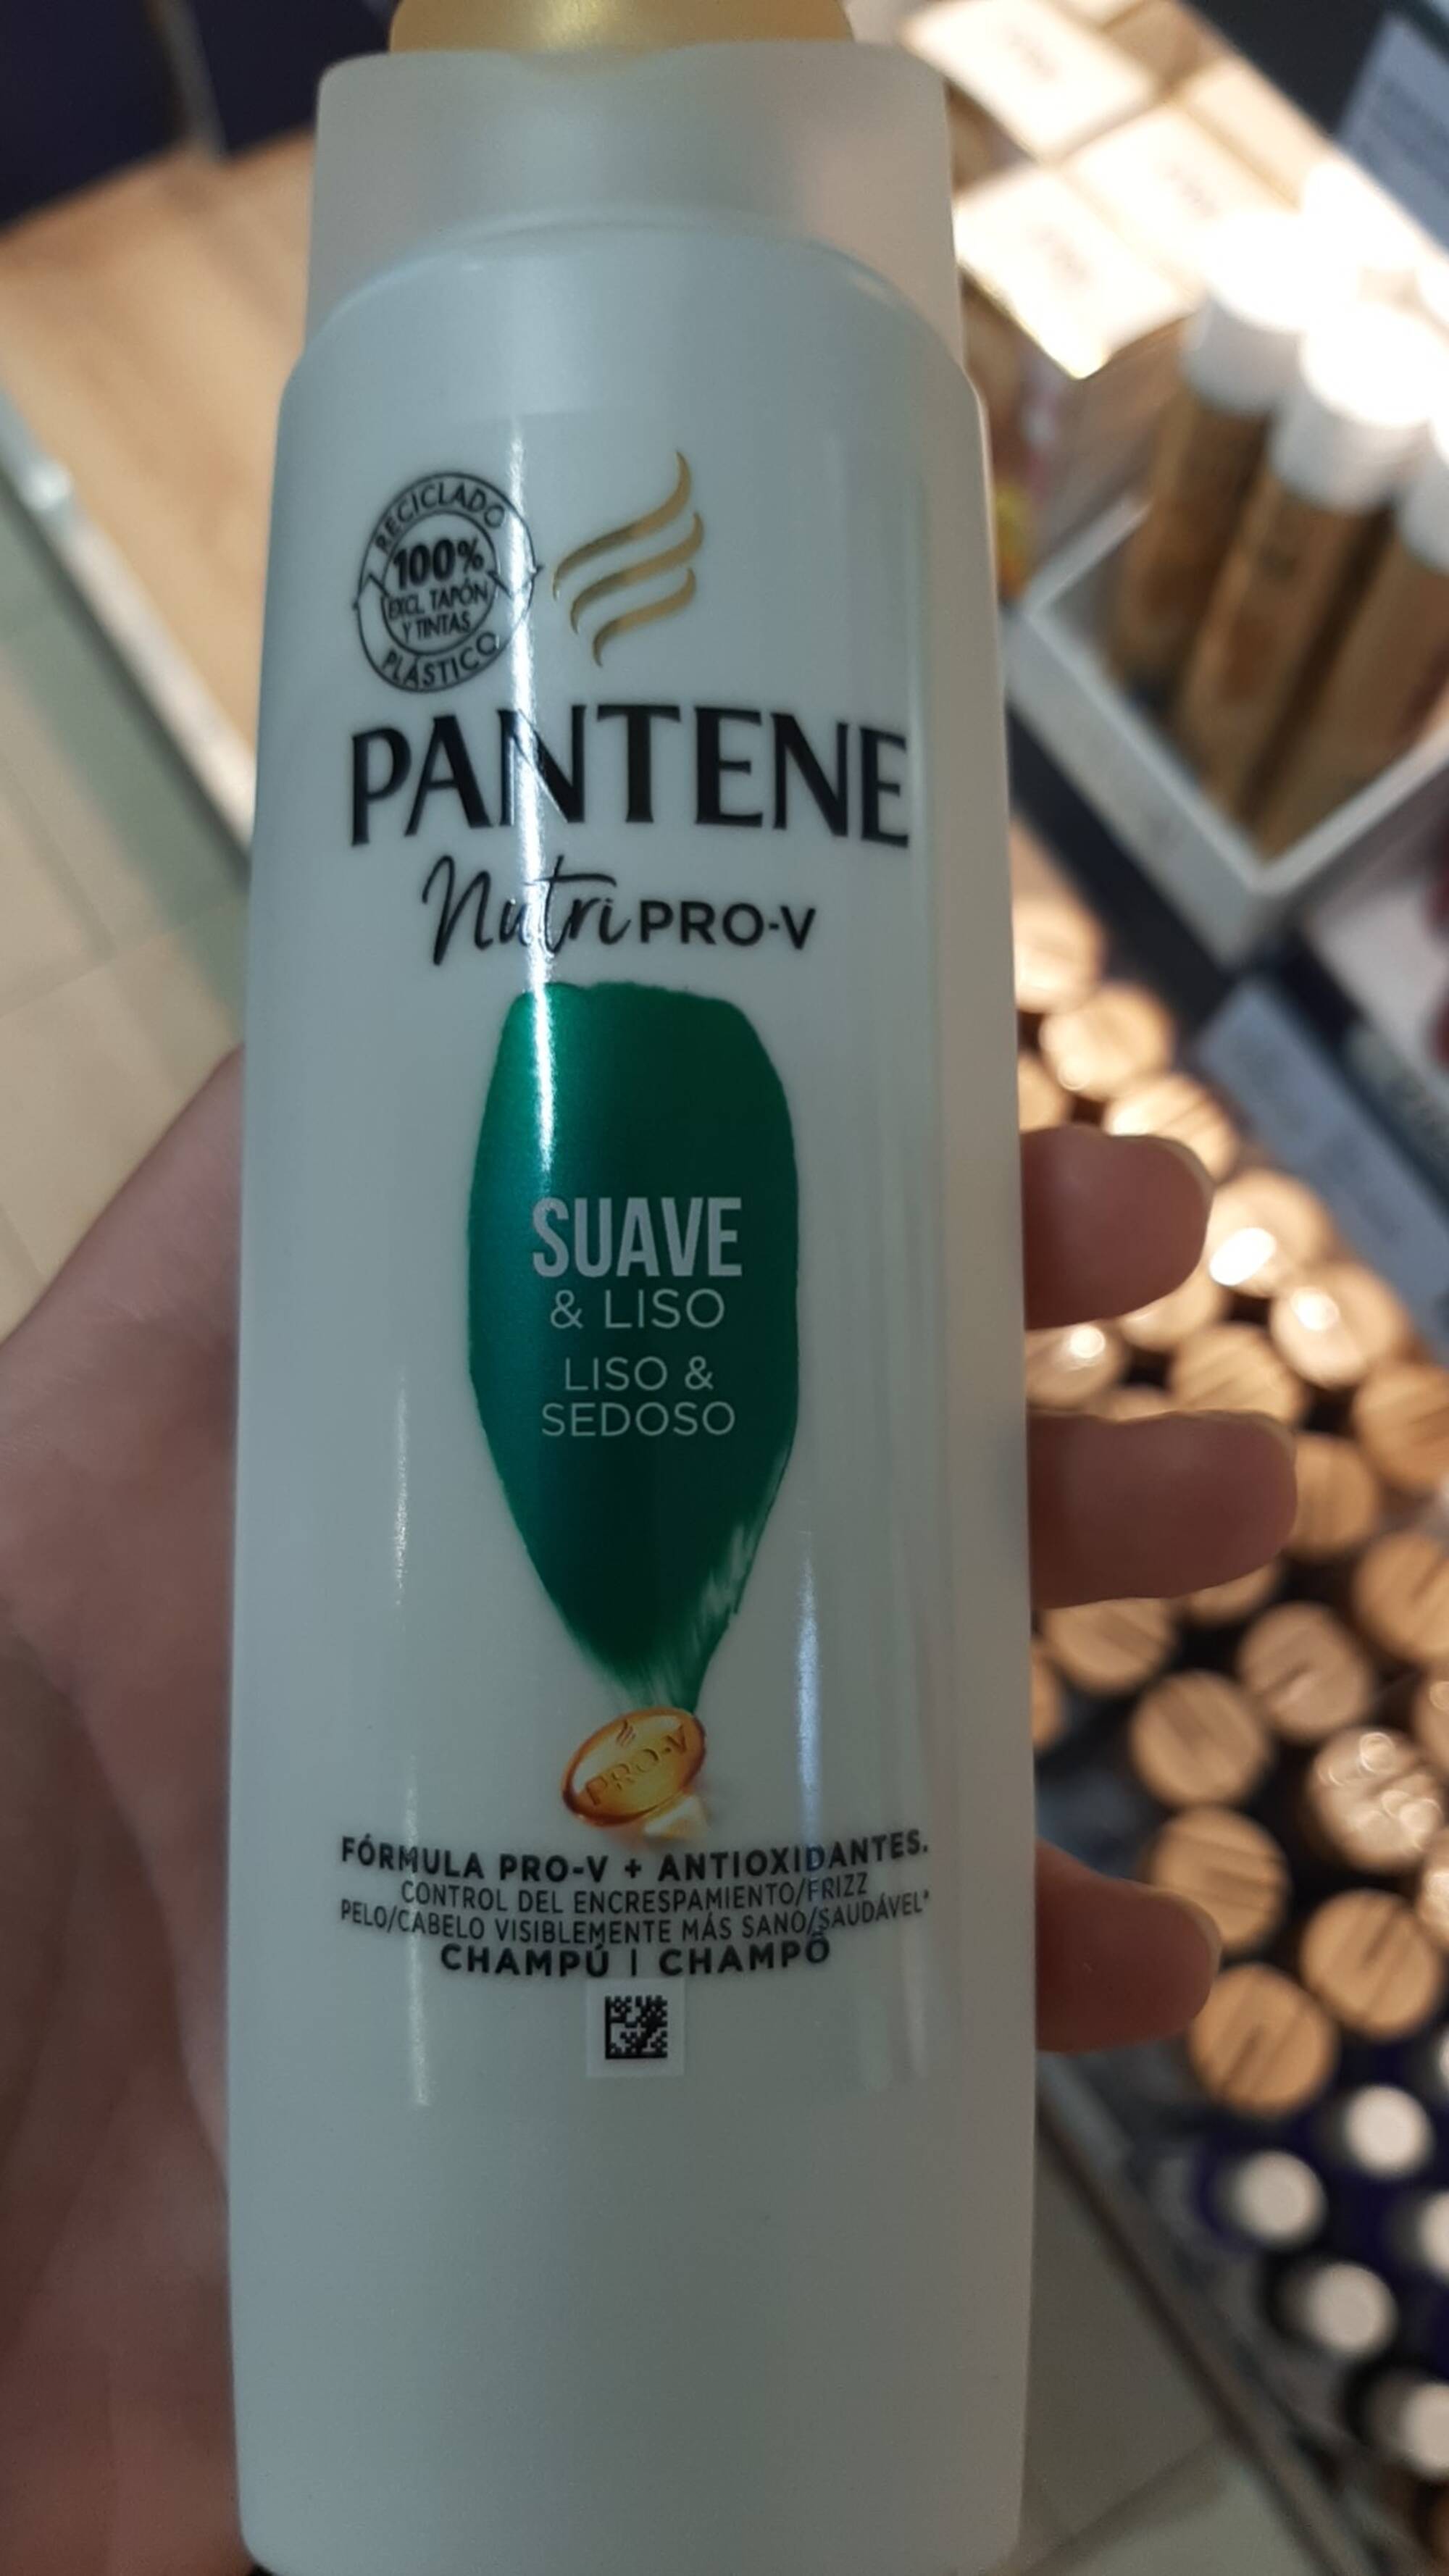 PANTENE - Nutri pro-v - Champú suave & liso 